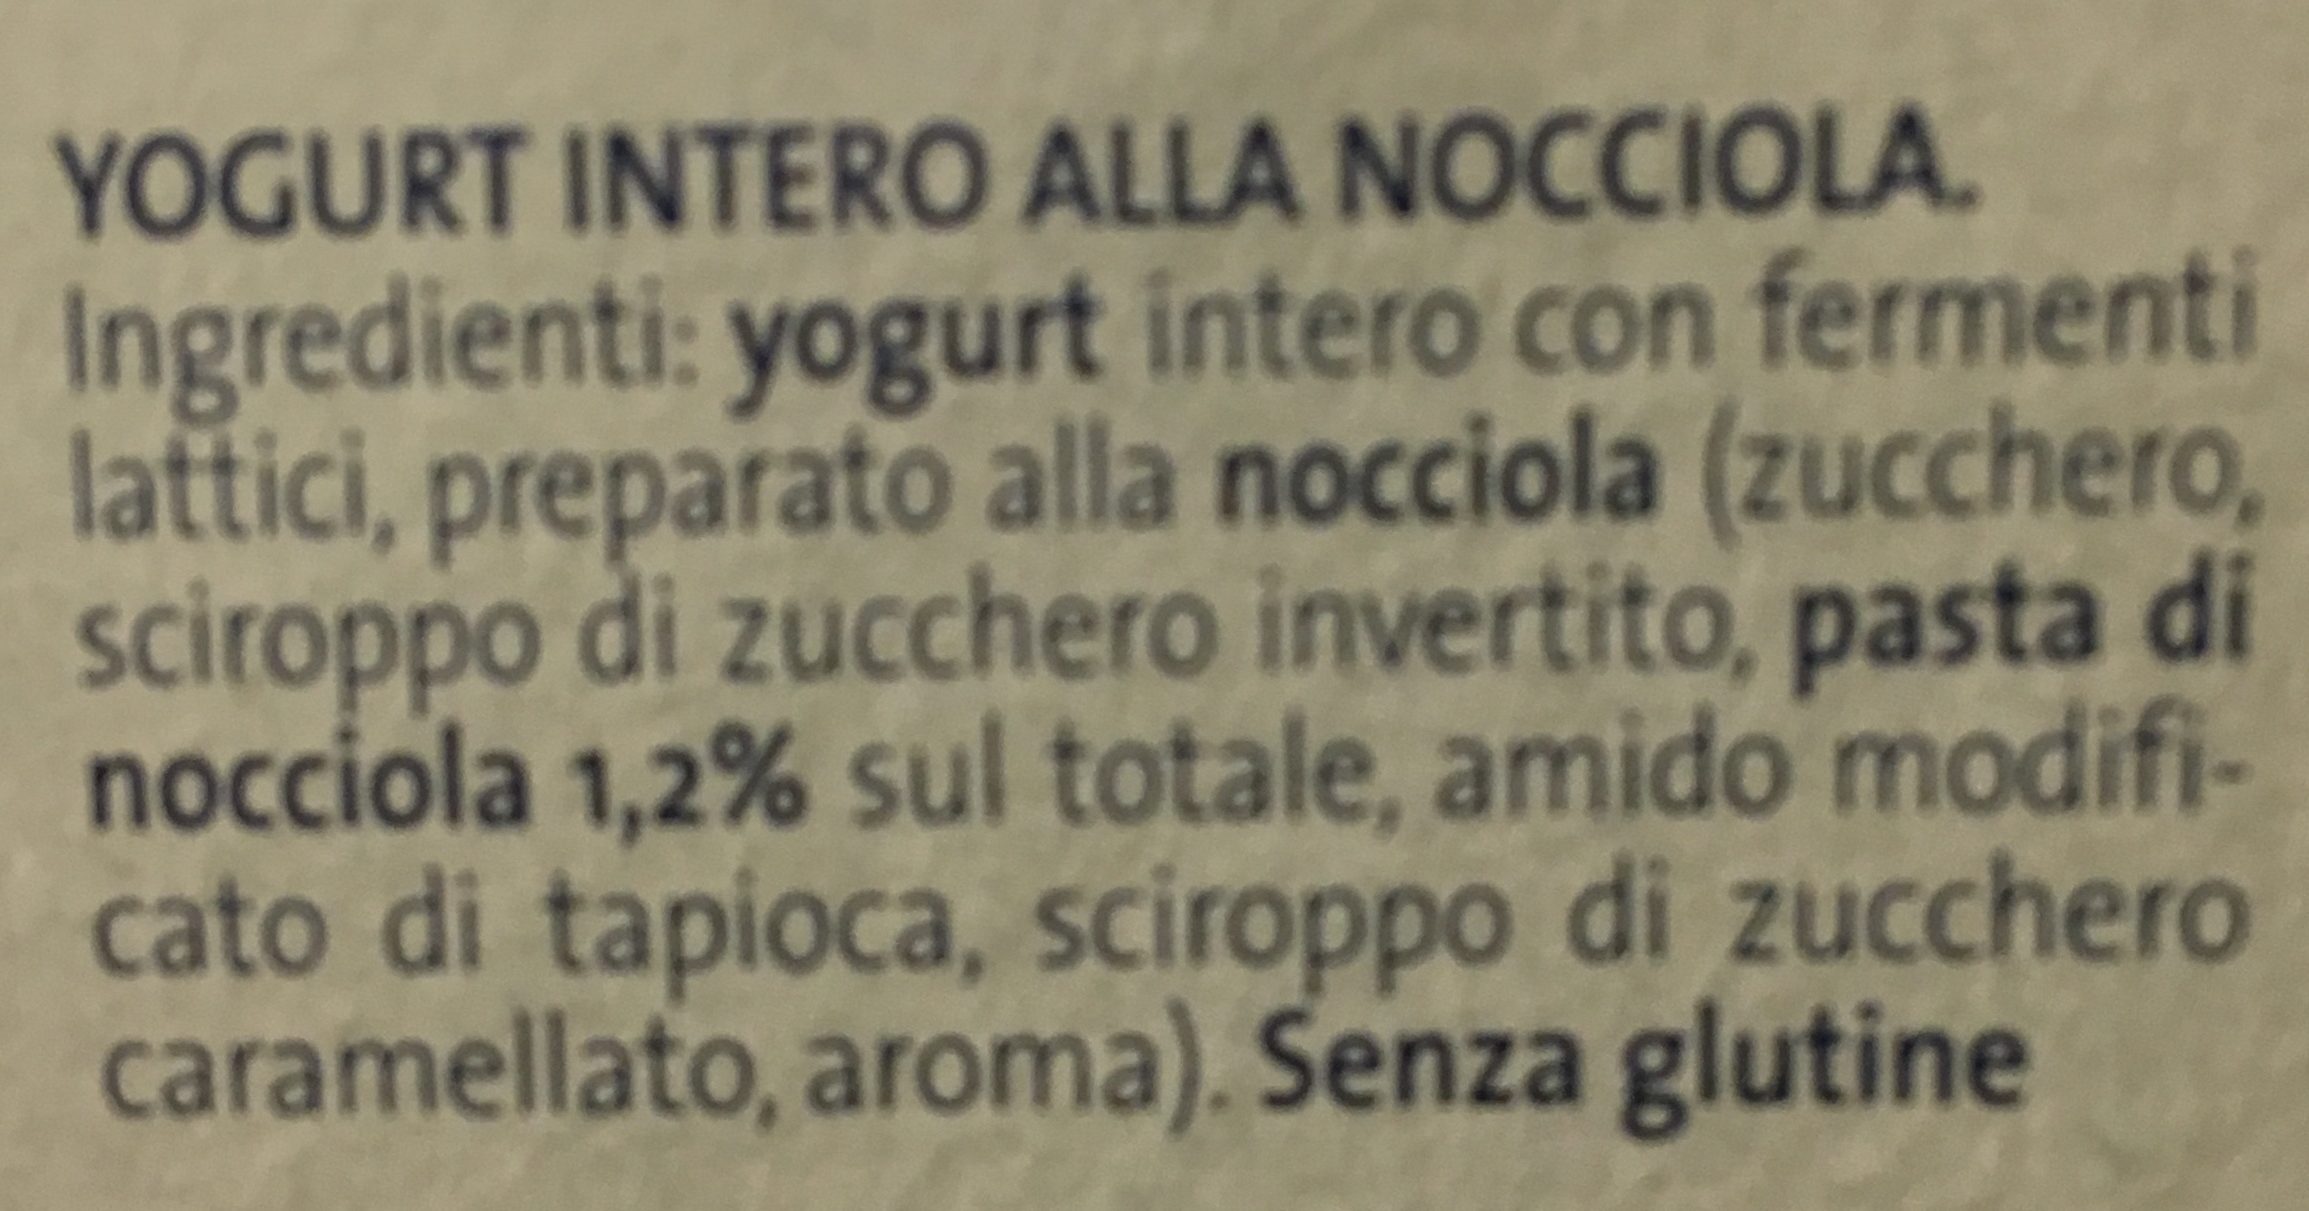 Yogurt intero - 125g x 2 - Gusto nocciola - Ingredientes - it